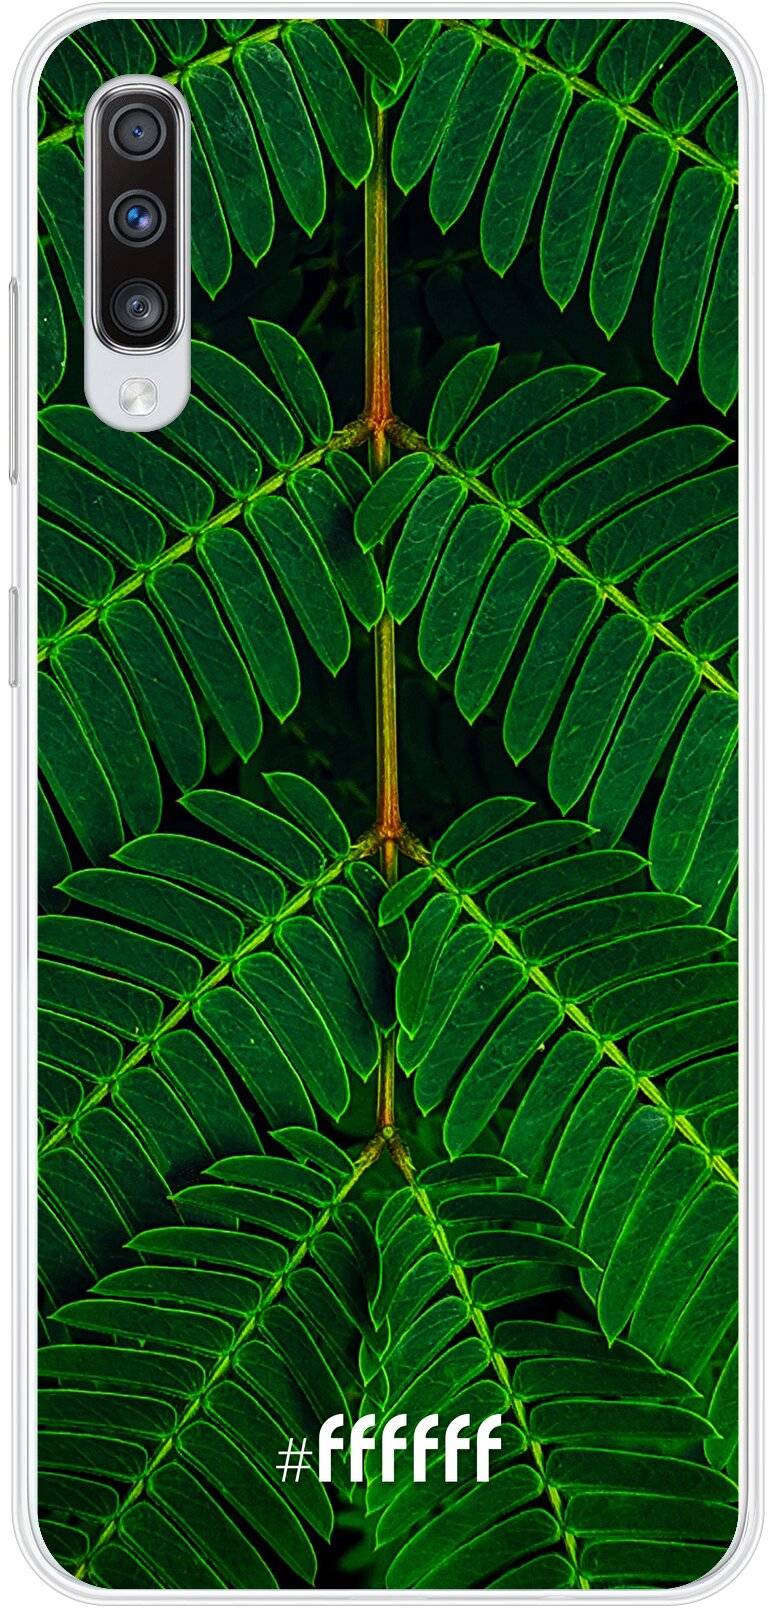 Symmetric Plants Galaxy A70